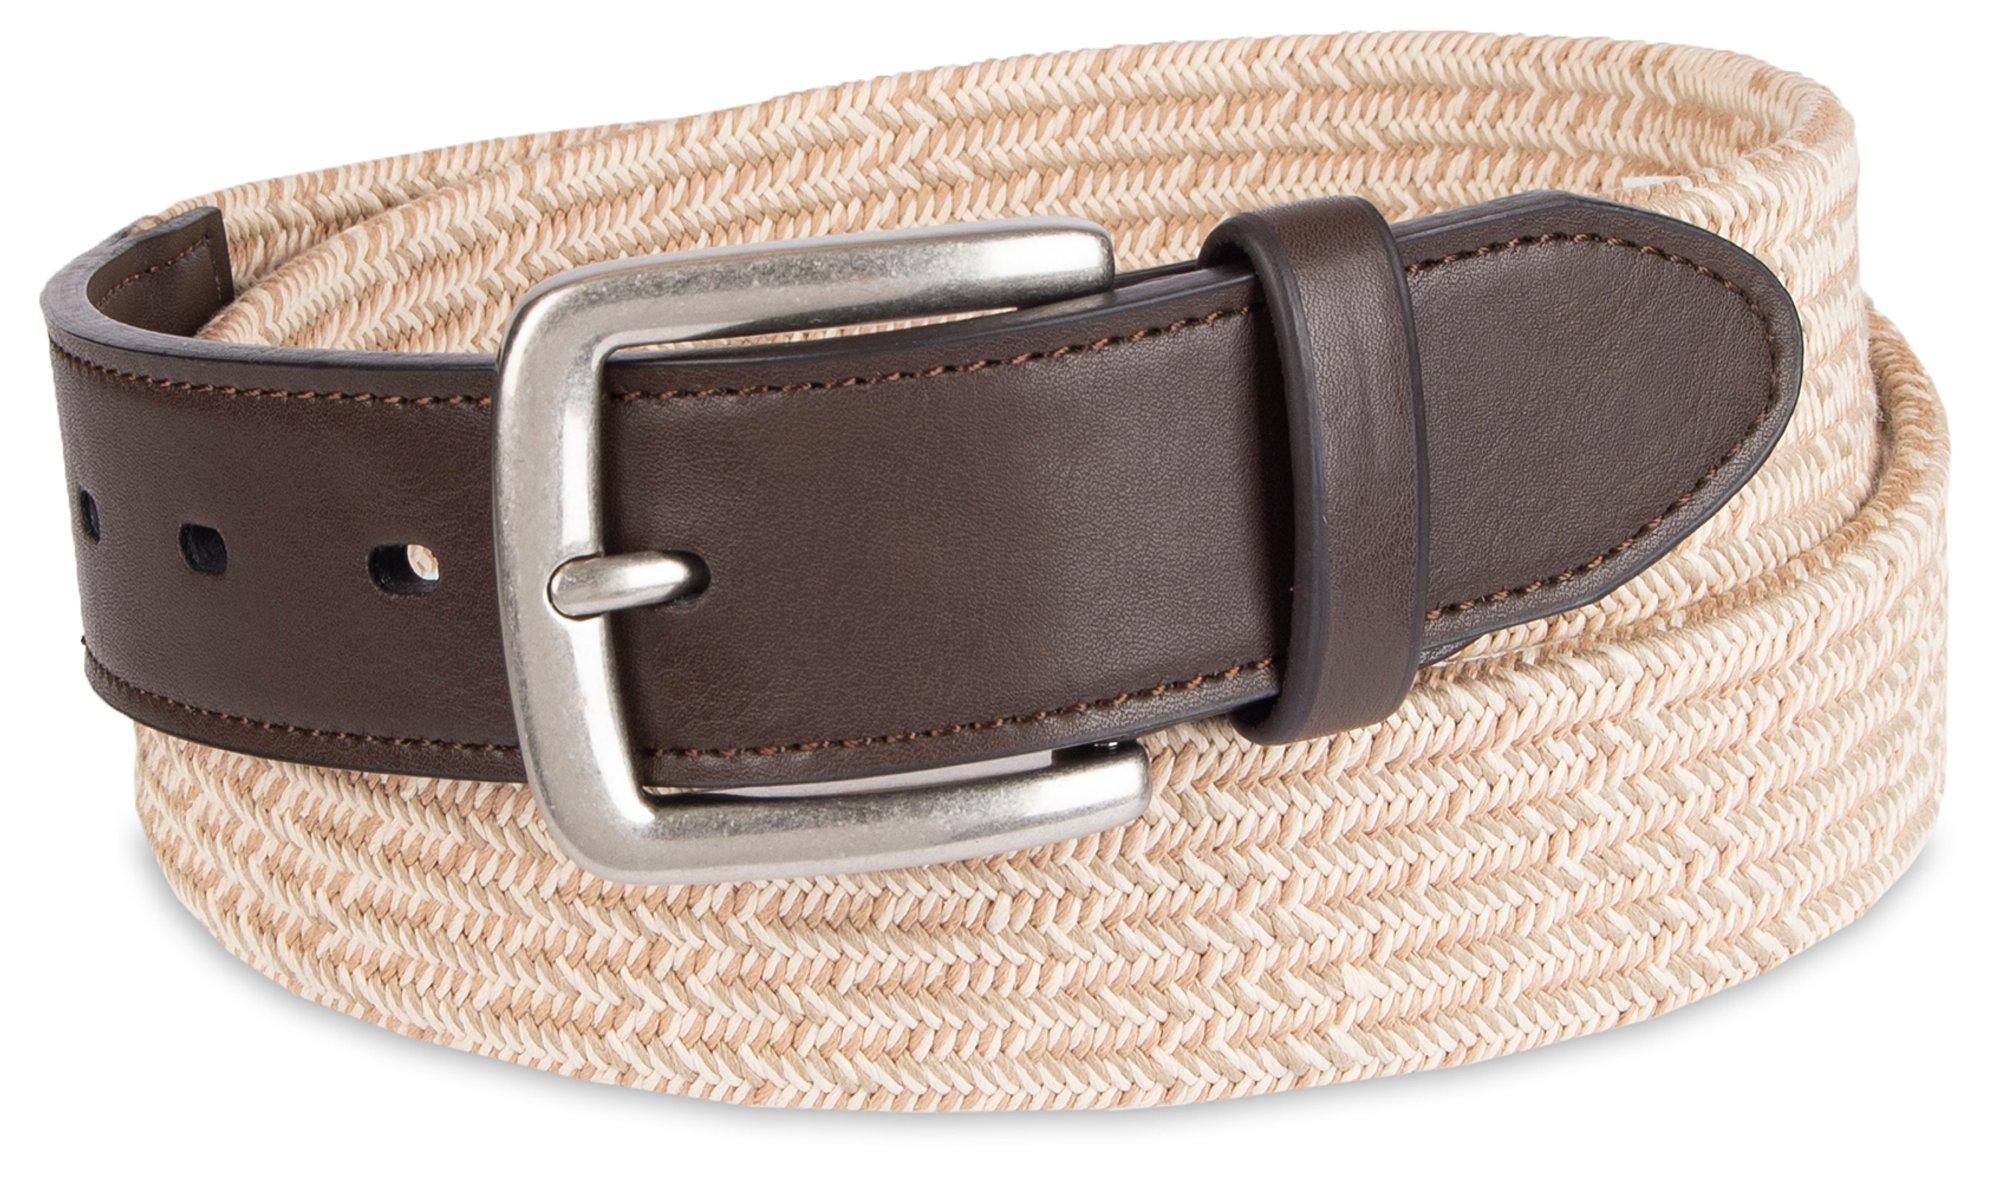 Dockers 30mm Glazed Top Braided Belt, $14, .com